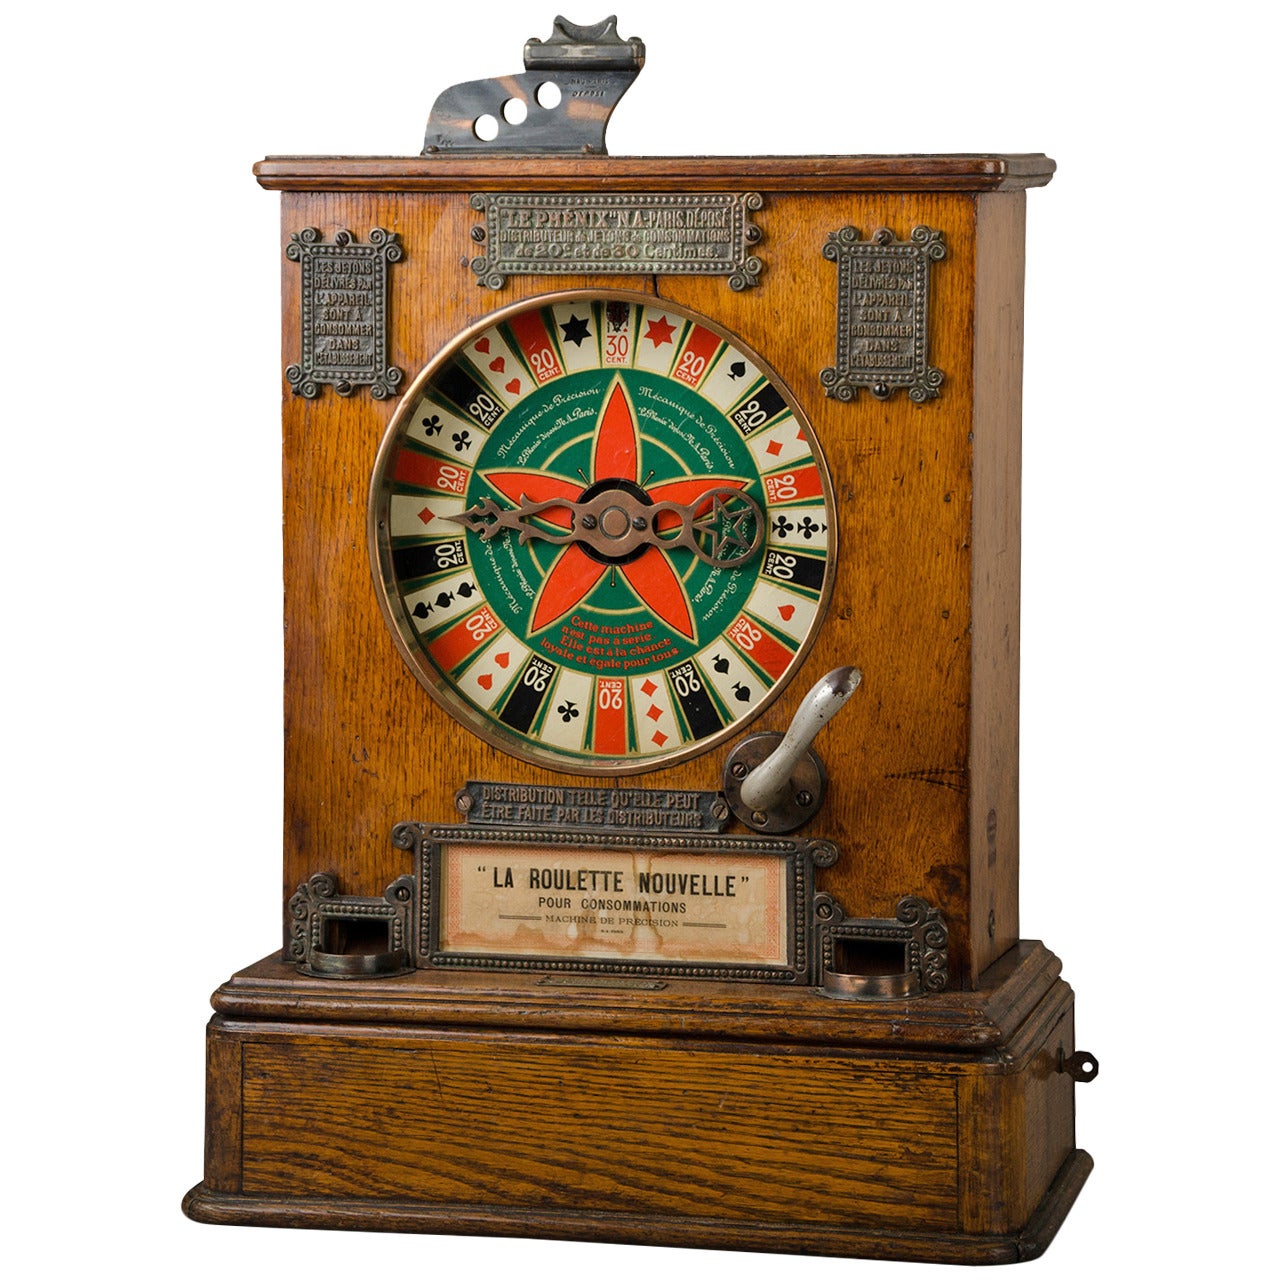 French 1906 Slot Machine 'Le Phenix'